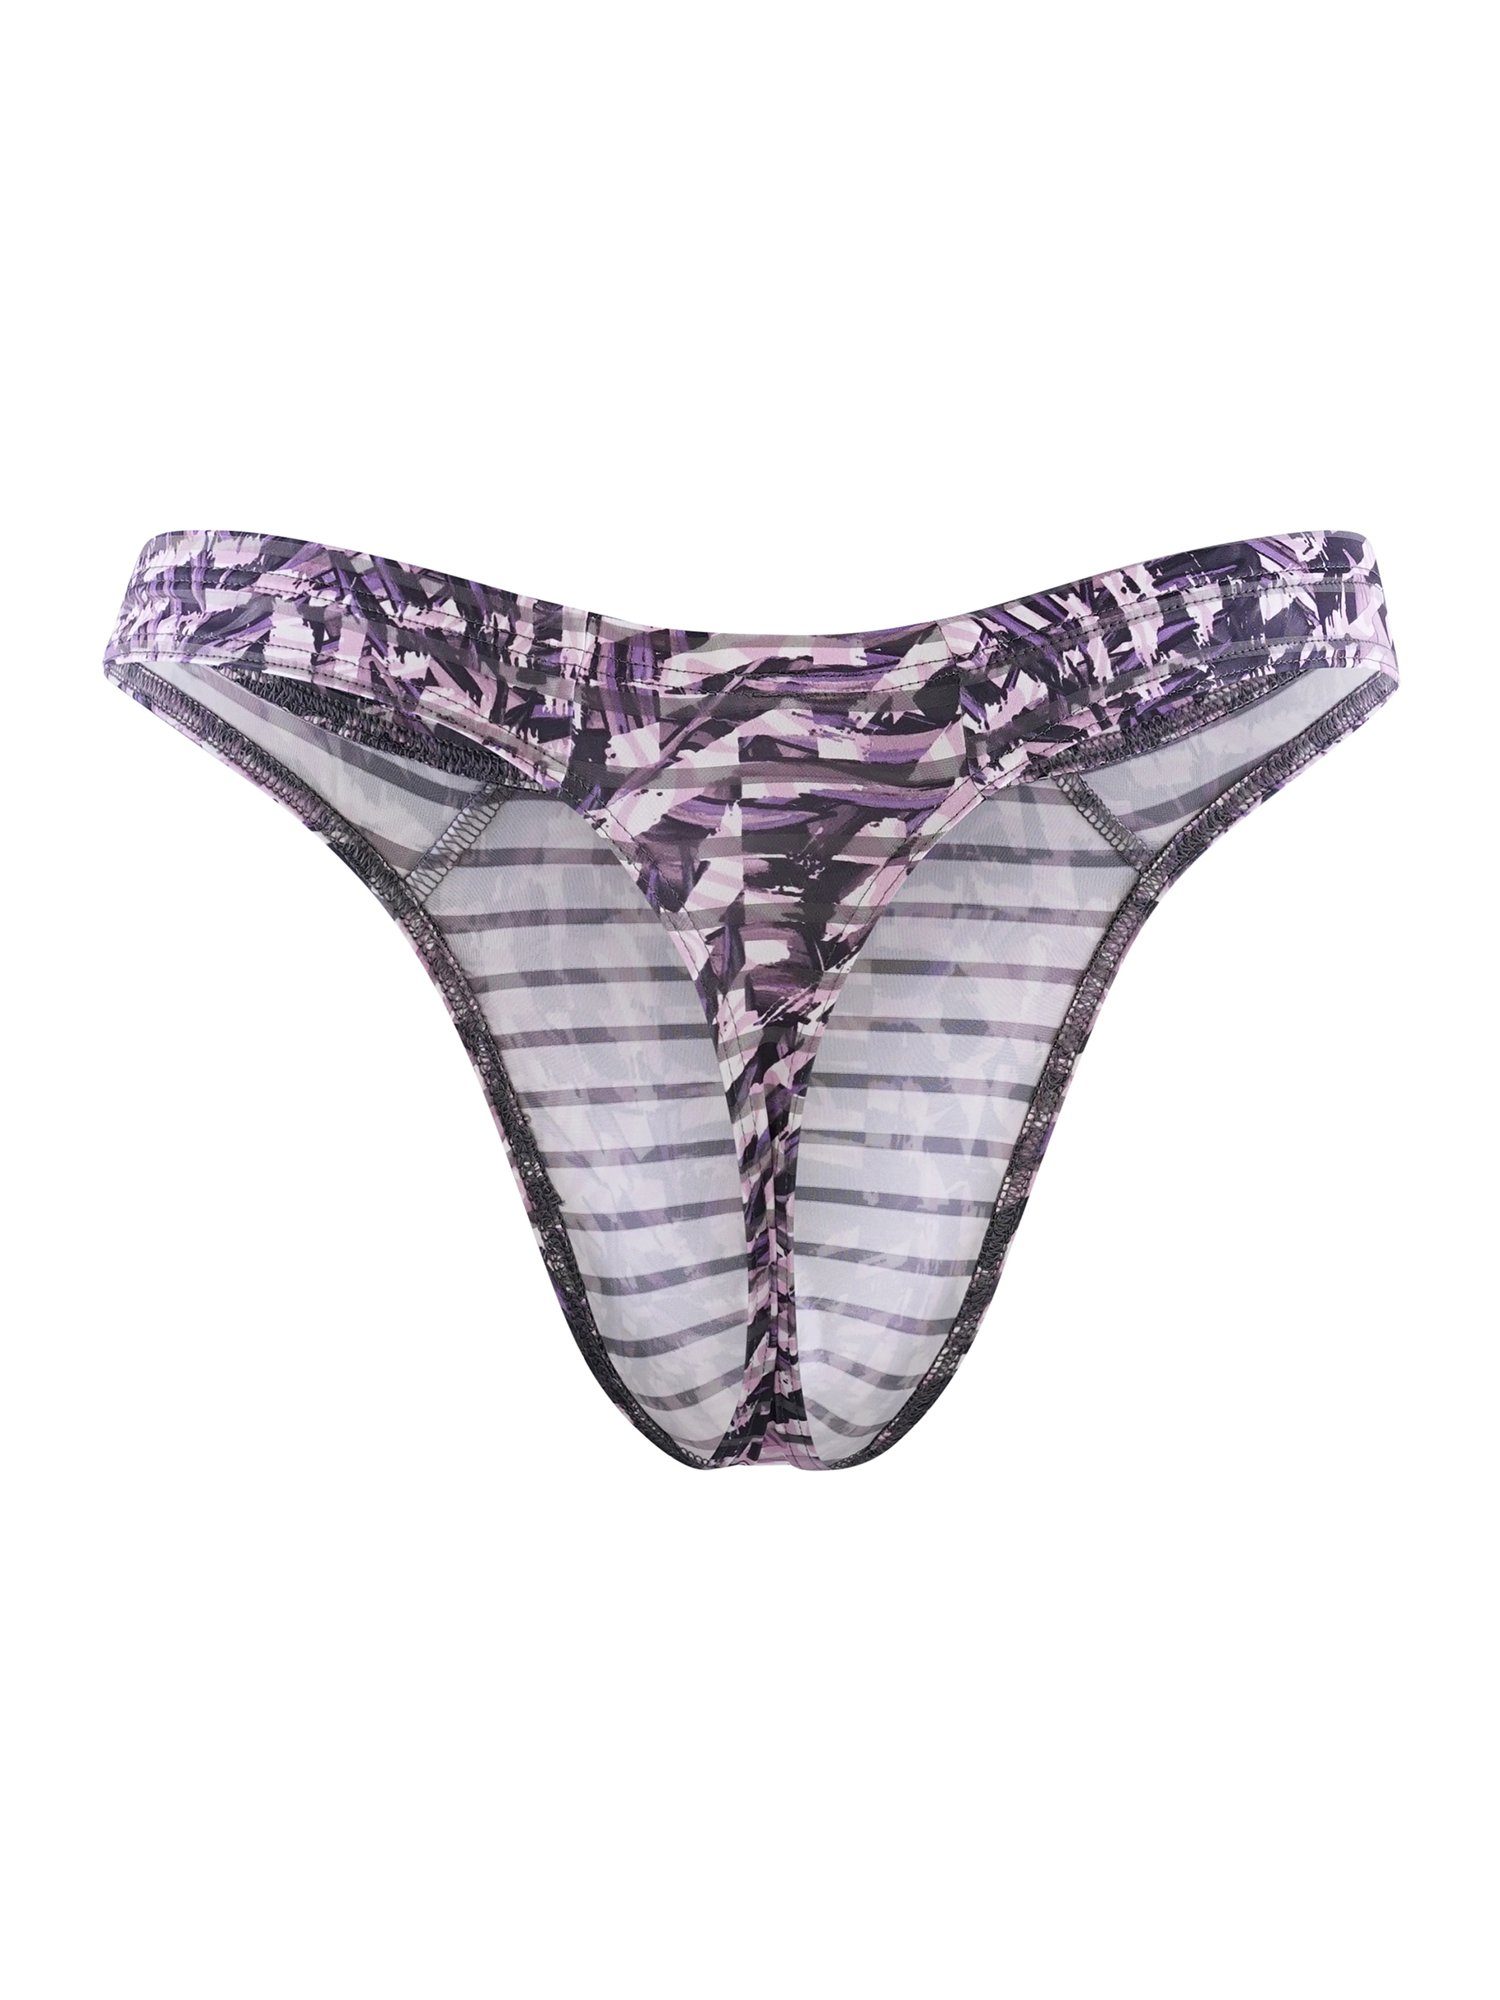 RED2333 Olaf String tanga unterhose Ministring violet Benz unterwäsche style